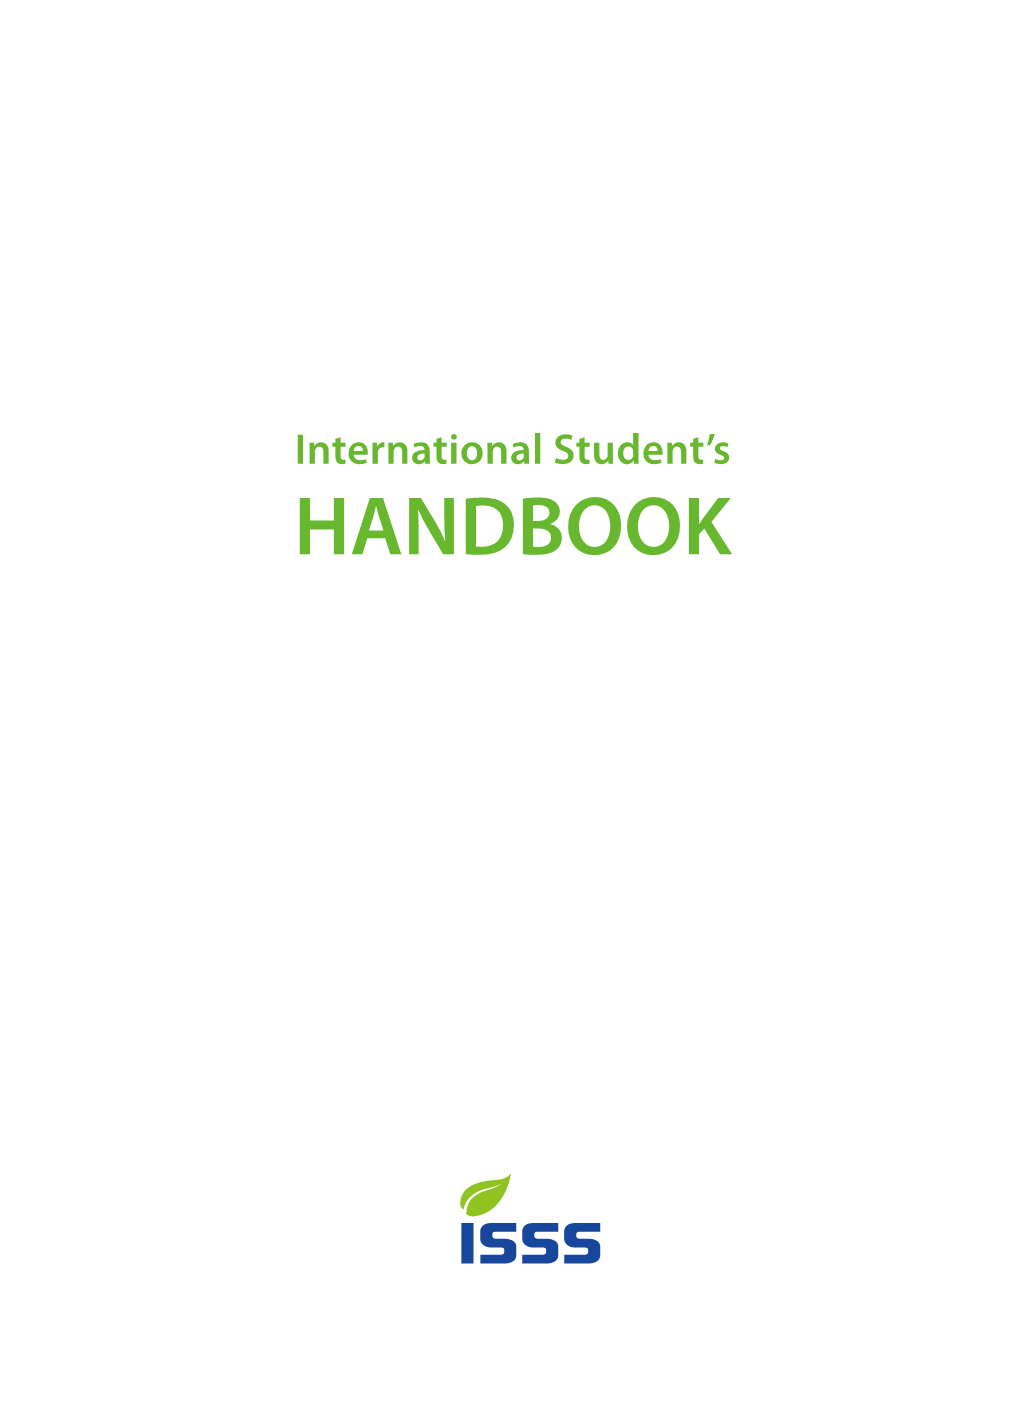 International Student's Handbook